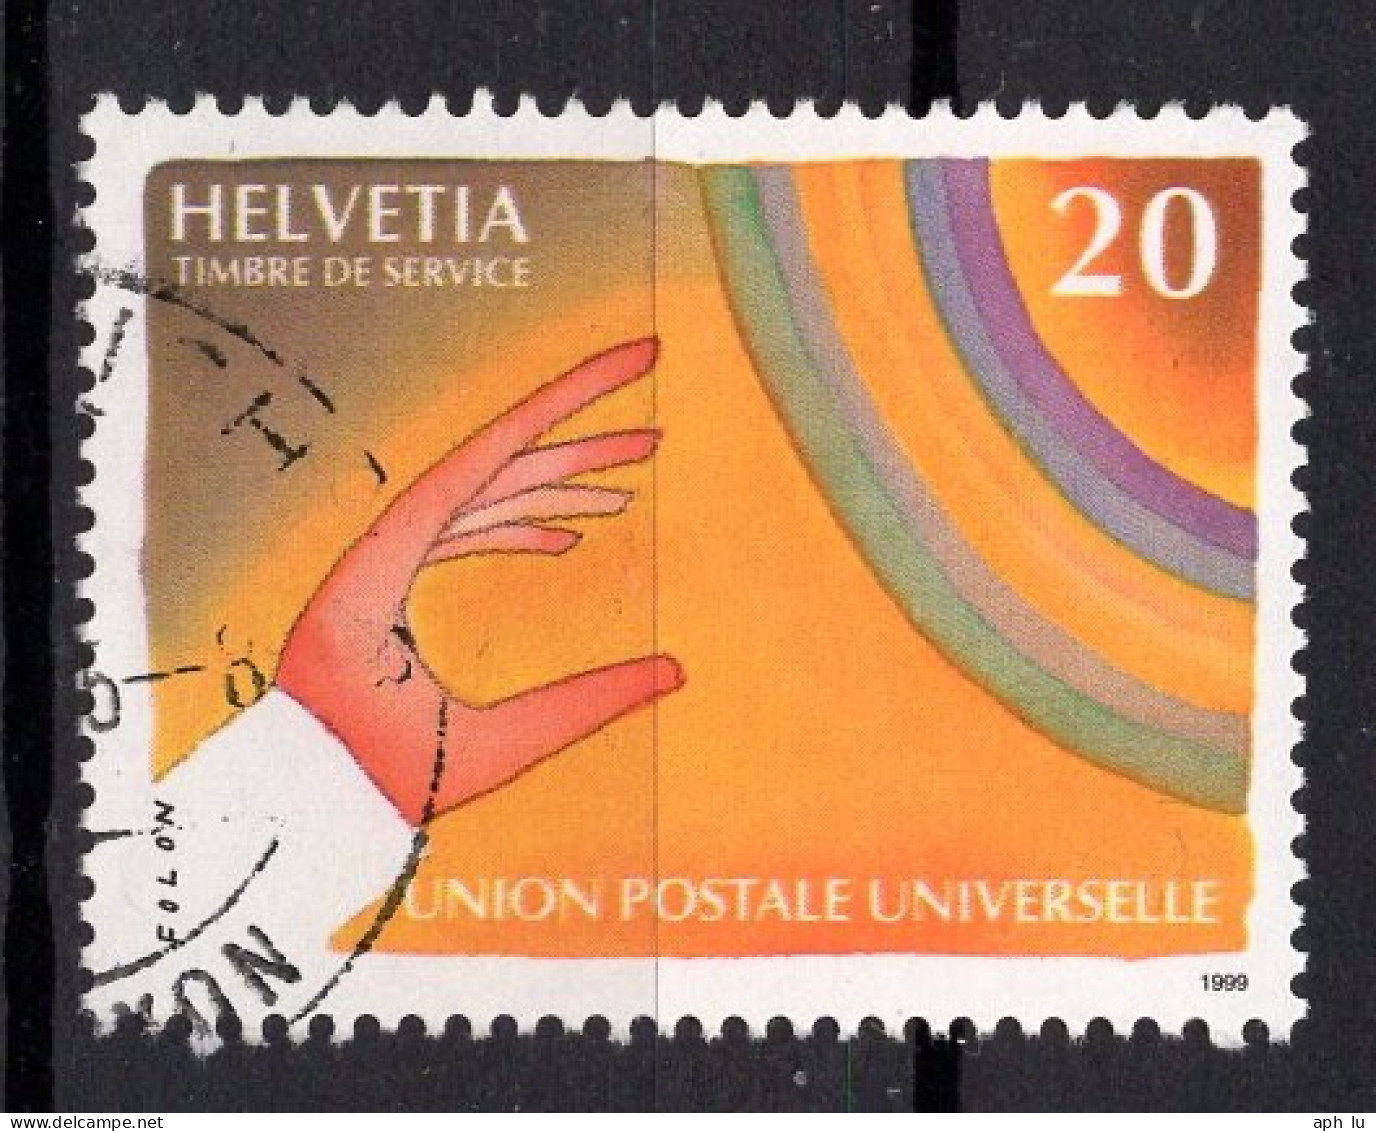 Union Postale Universelle (UPU) (h600903) - Dienstmarken